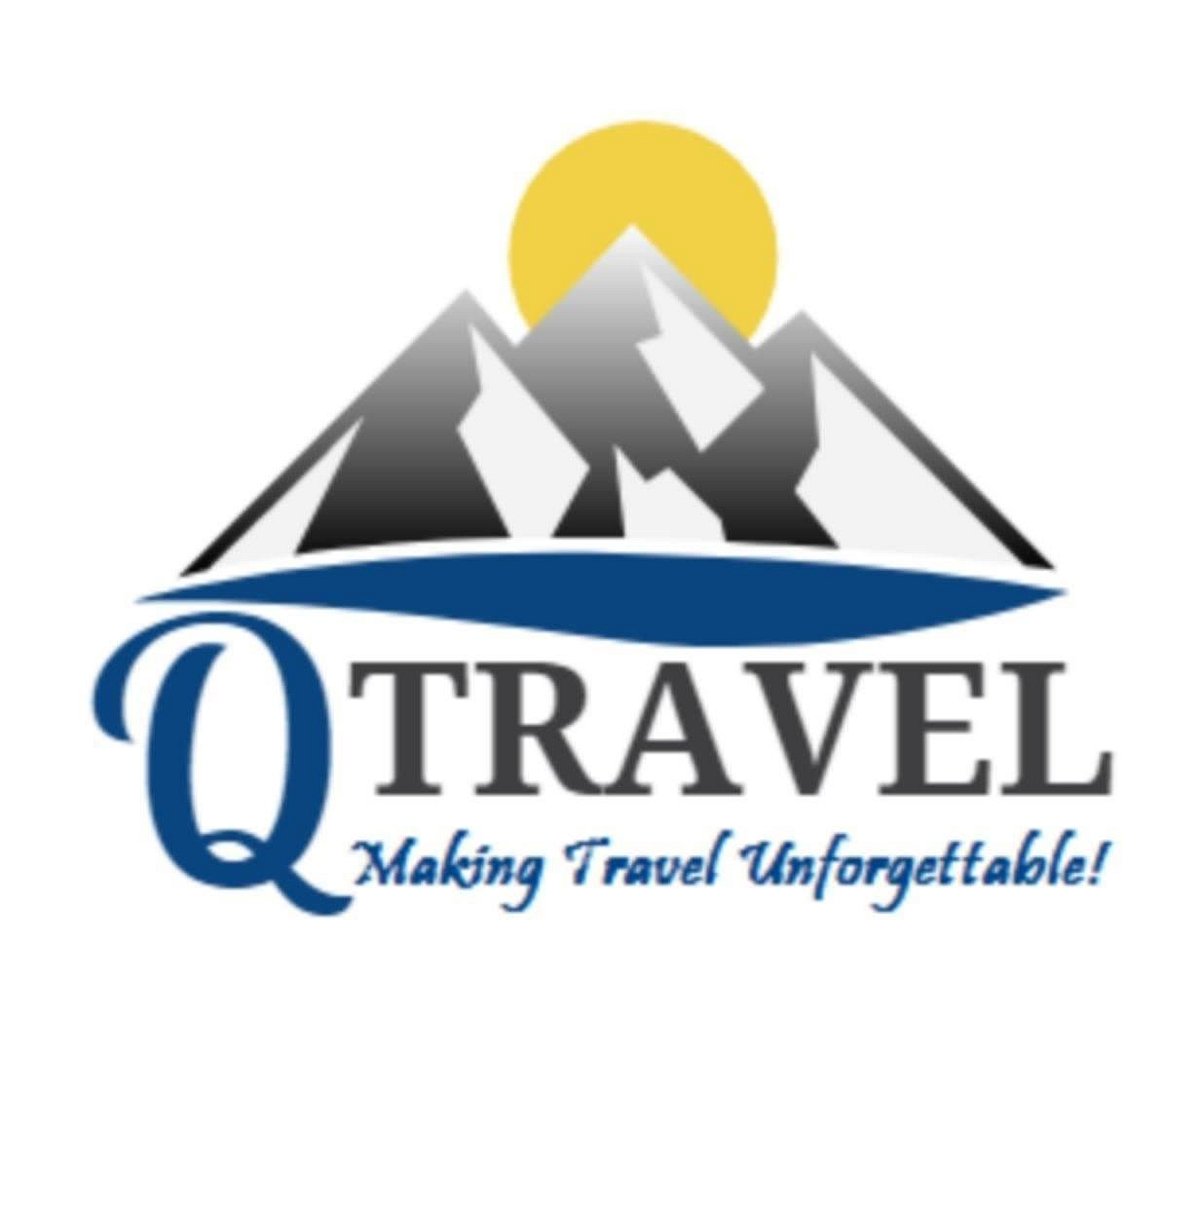 q travel